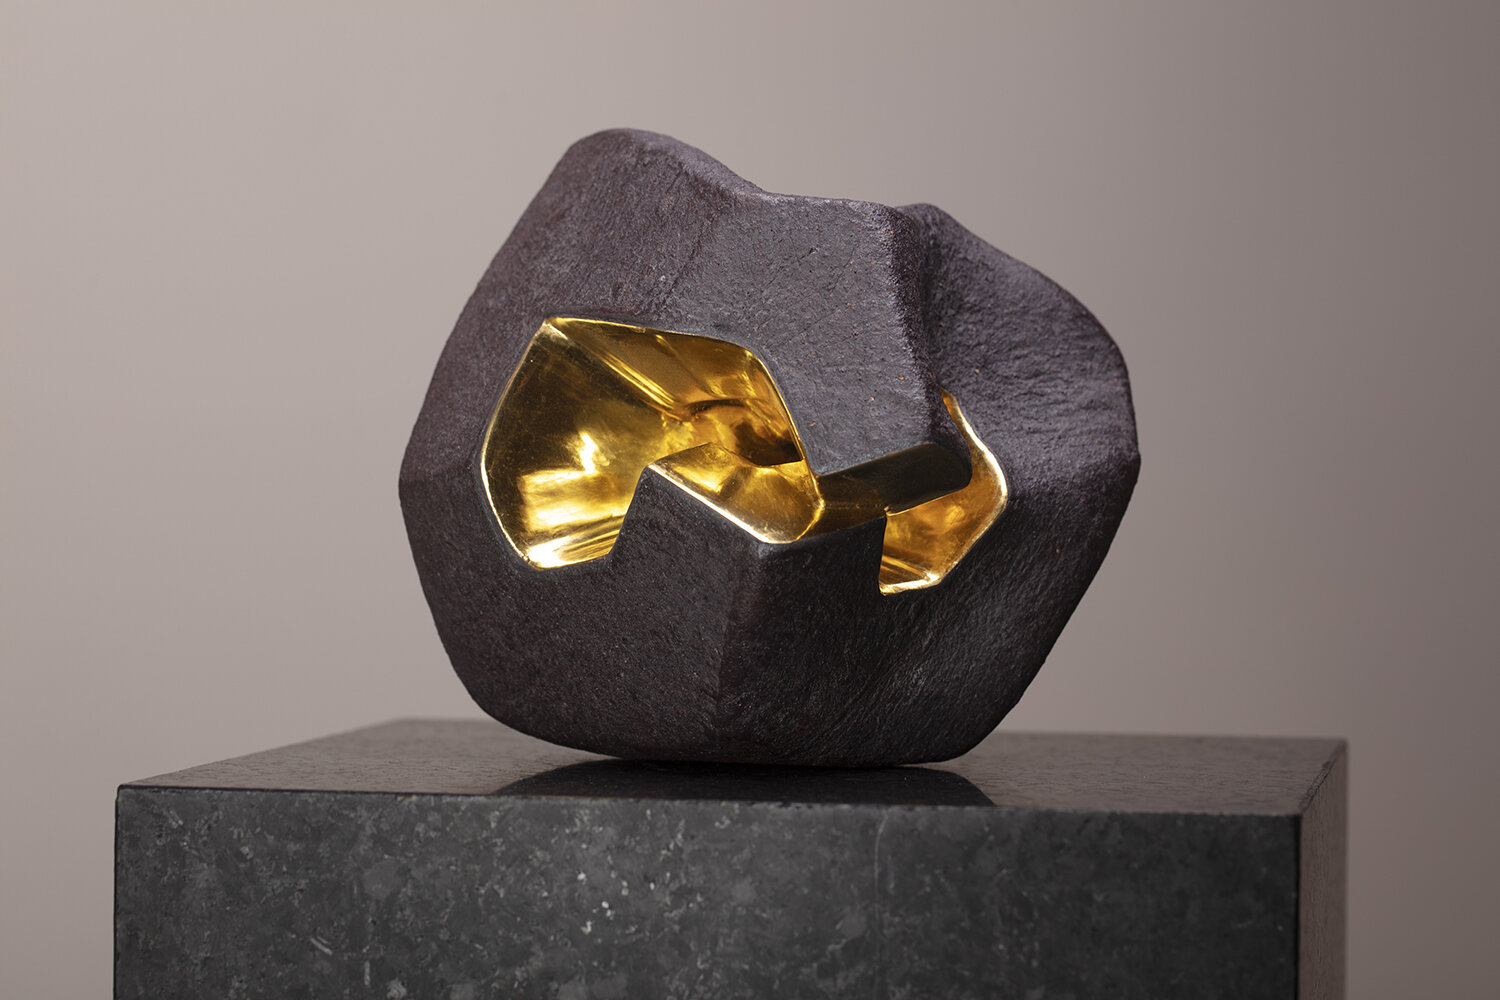 UNTITLED - CERAMIC AND GOLD sculpture 2020/1 - J. Yázpik